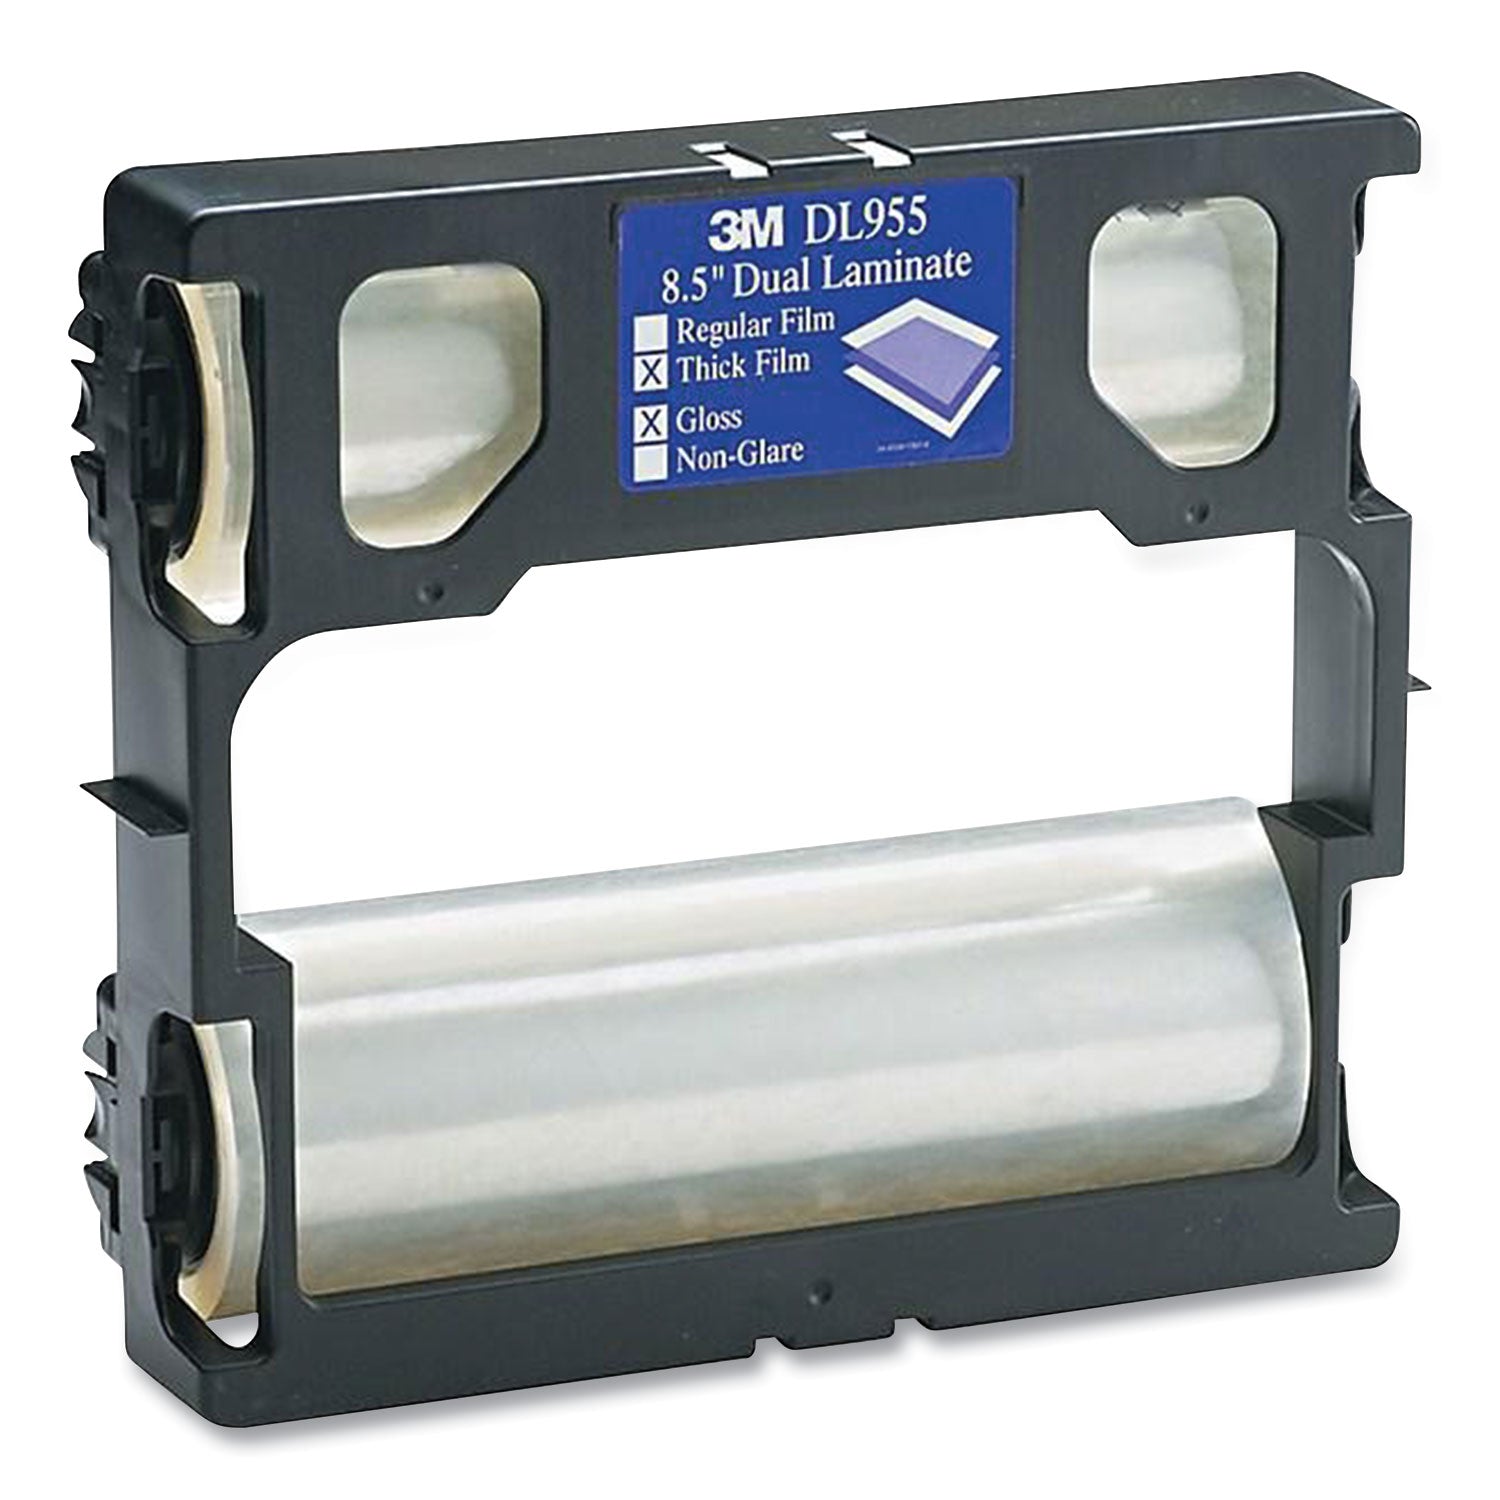 refill-for-ls950-heat-free-laminating-machines-86-mil-85-x-50-ft-gloss-clear_mmmdl955 - 2